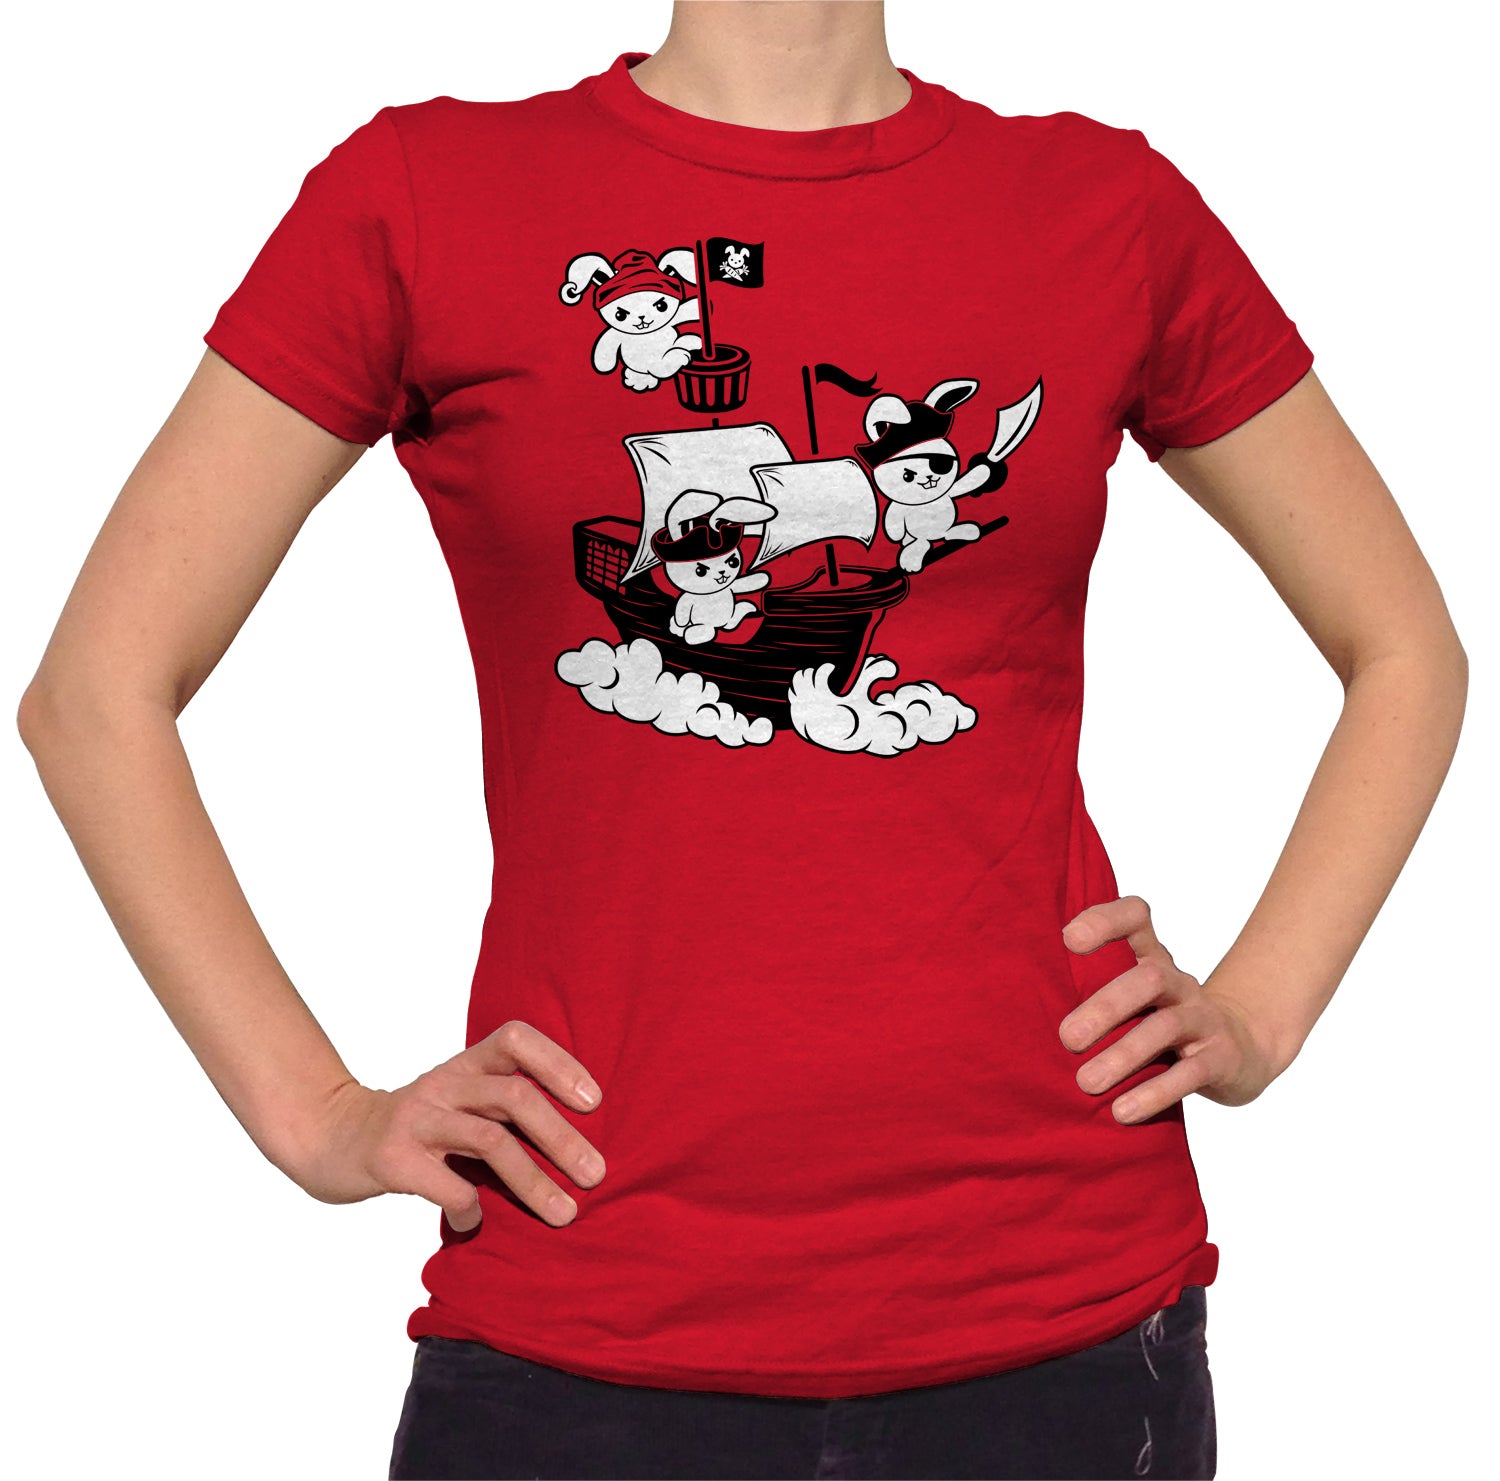 Women's Pirate Bunnies T-Shirt - By Ex-Boyfriend